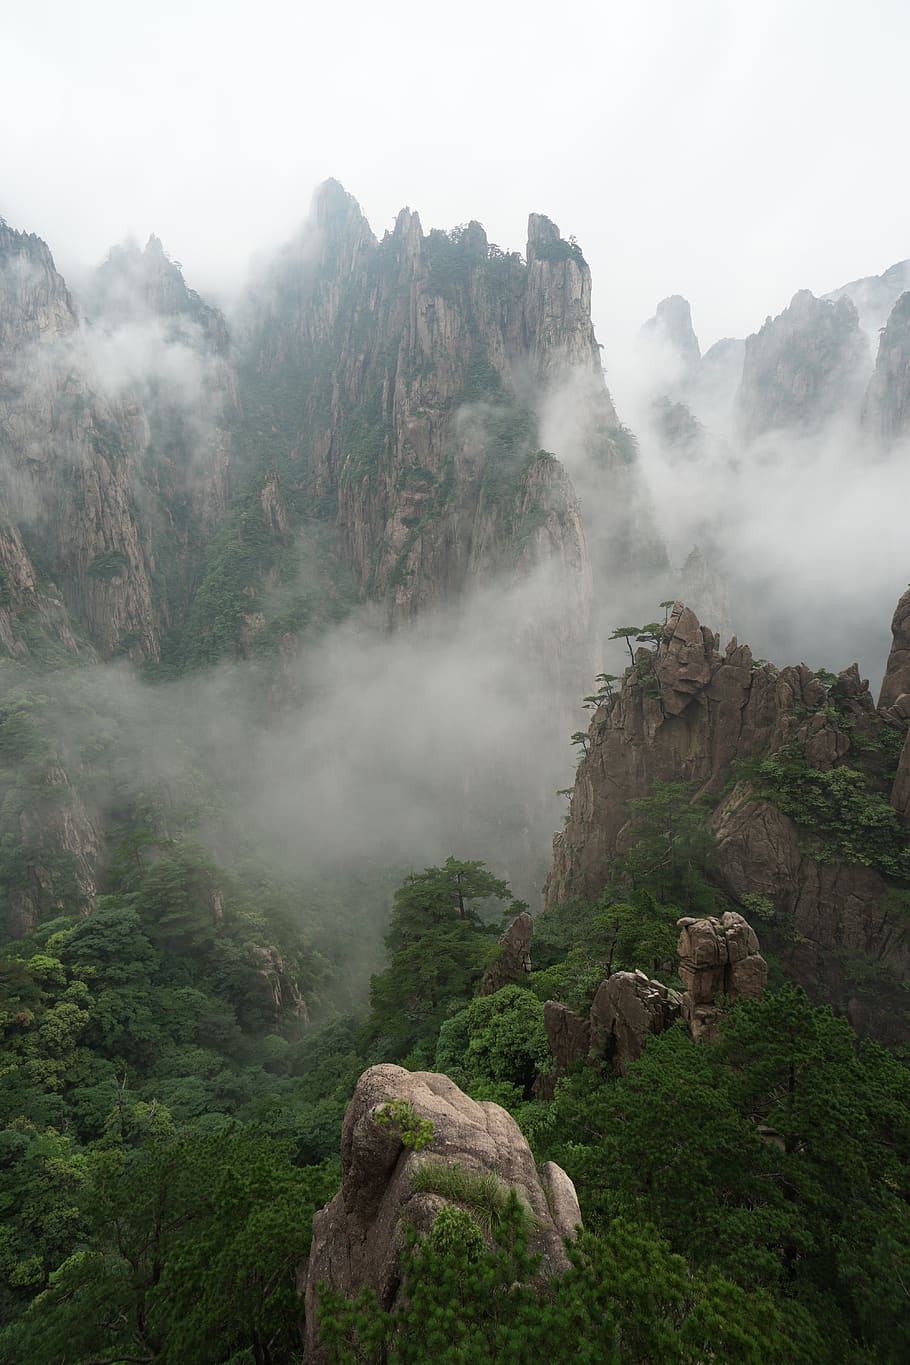 huangshan, mountain, mountain range, fog, trees, china, scenics - nature, environment, tranquil scene, plant